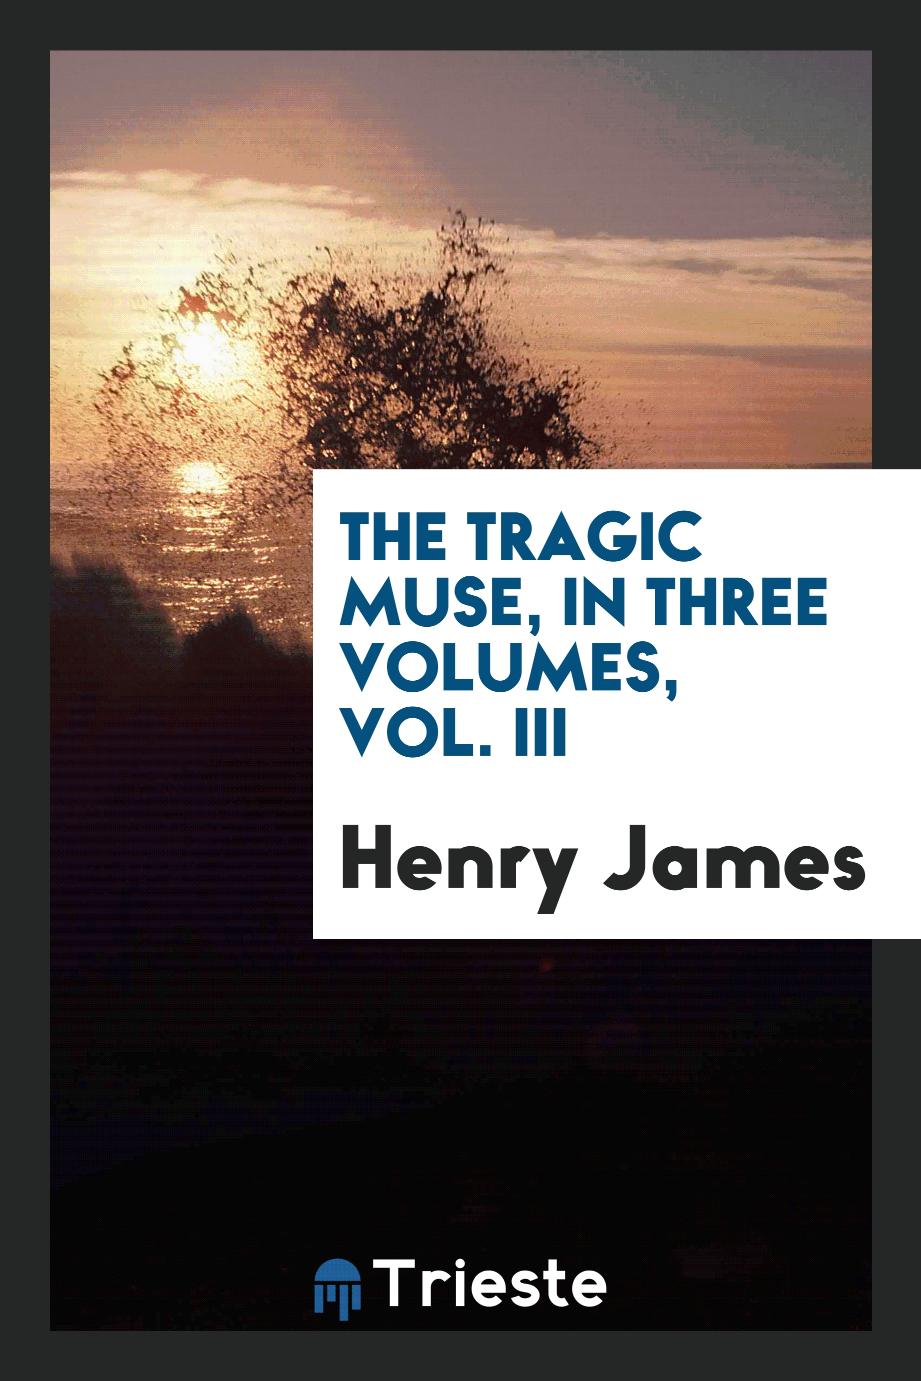 The tragic muse, in three volumes, Vol. III